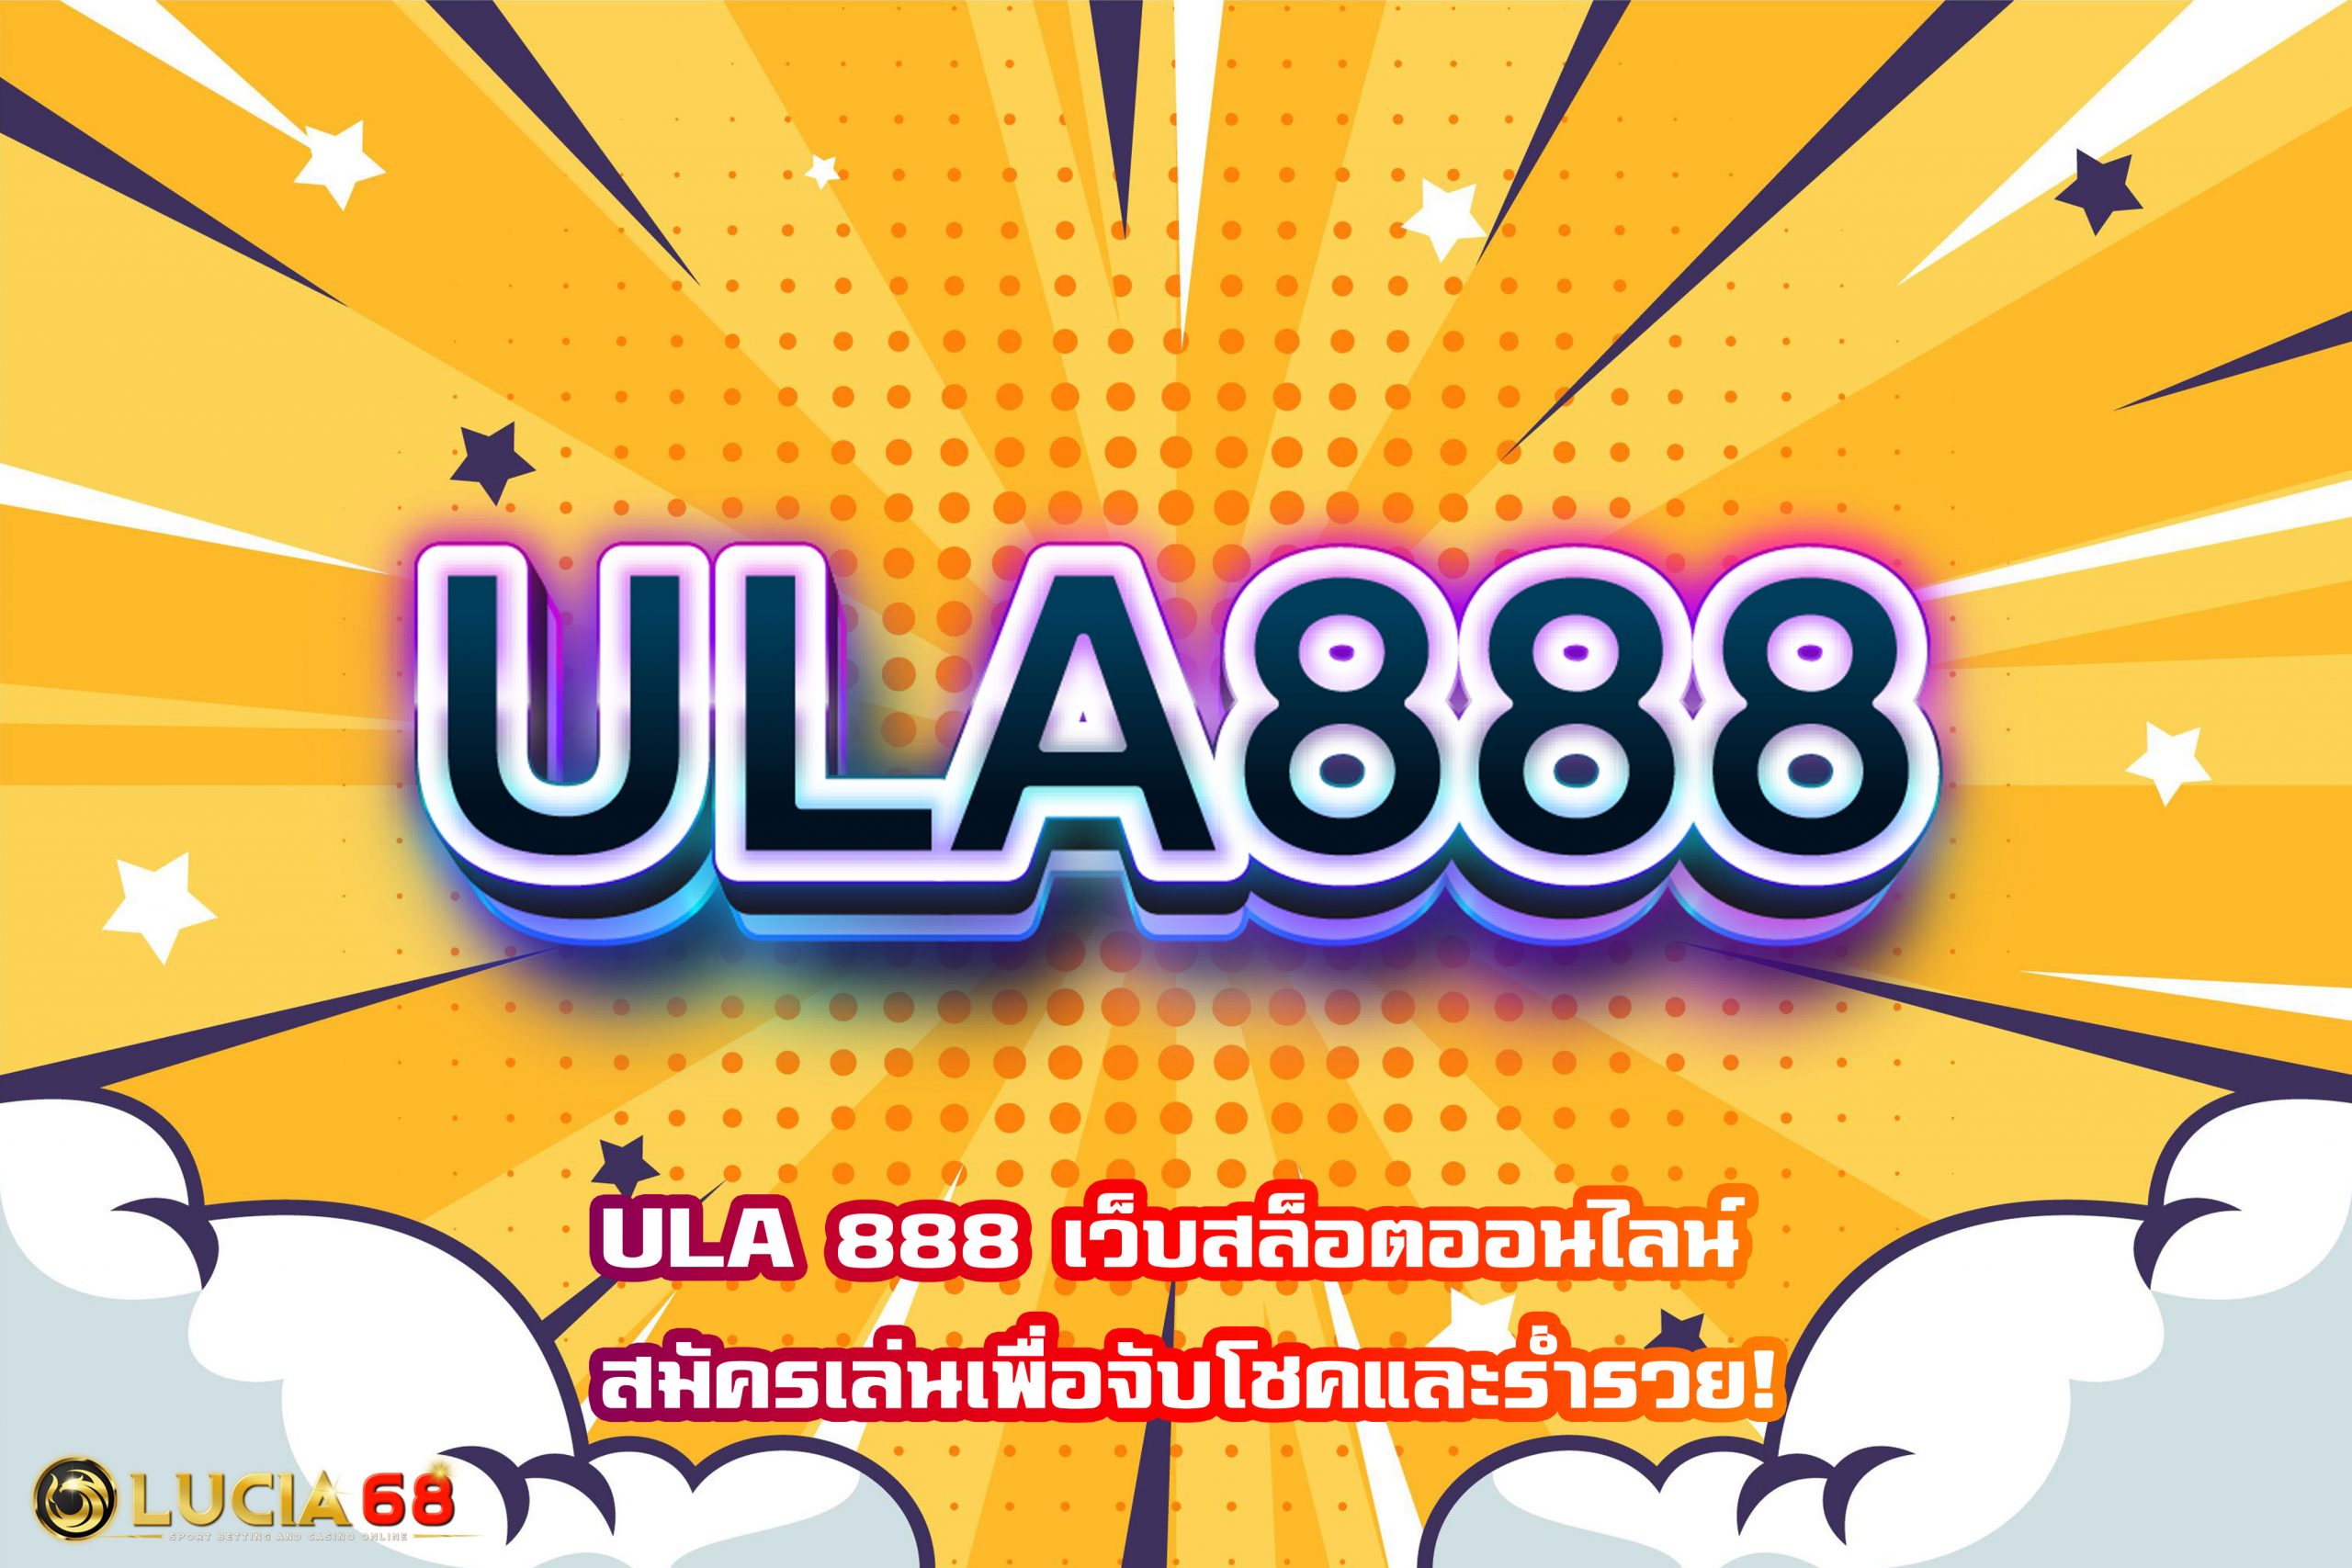 ULA 888 เว็บสล็อตออนไลน์ สมัครเล่นเพื่อจับโชคและร่ำรวย!